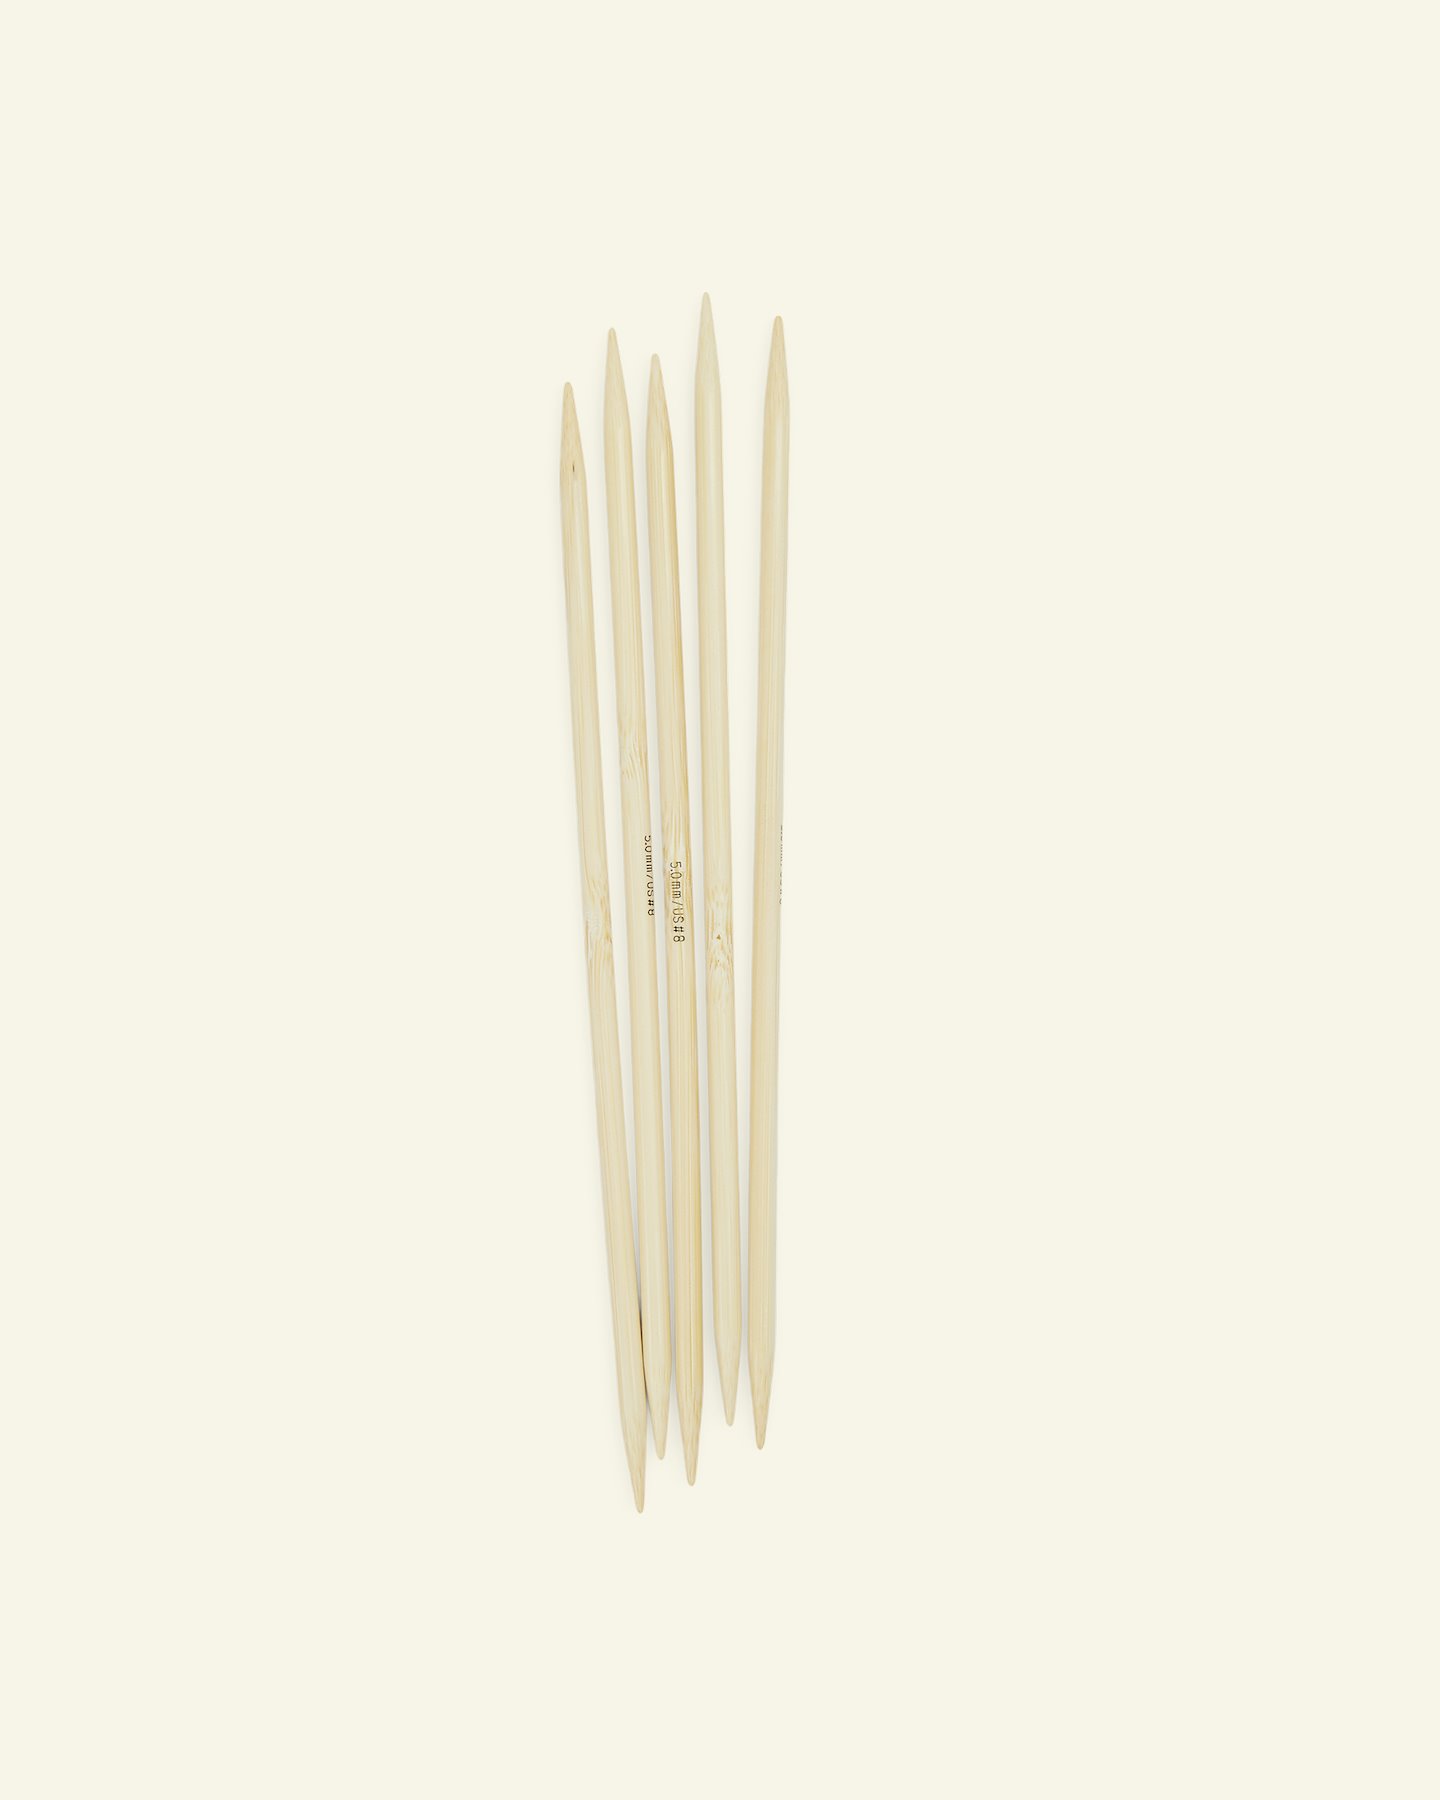 Addi Strumpfstricknadel bambus 20cm 5,0m 83278_pack